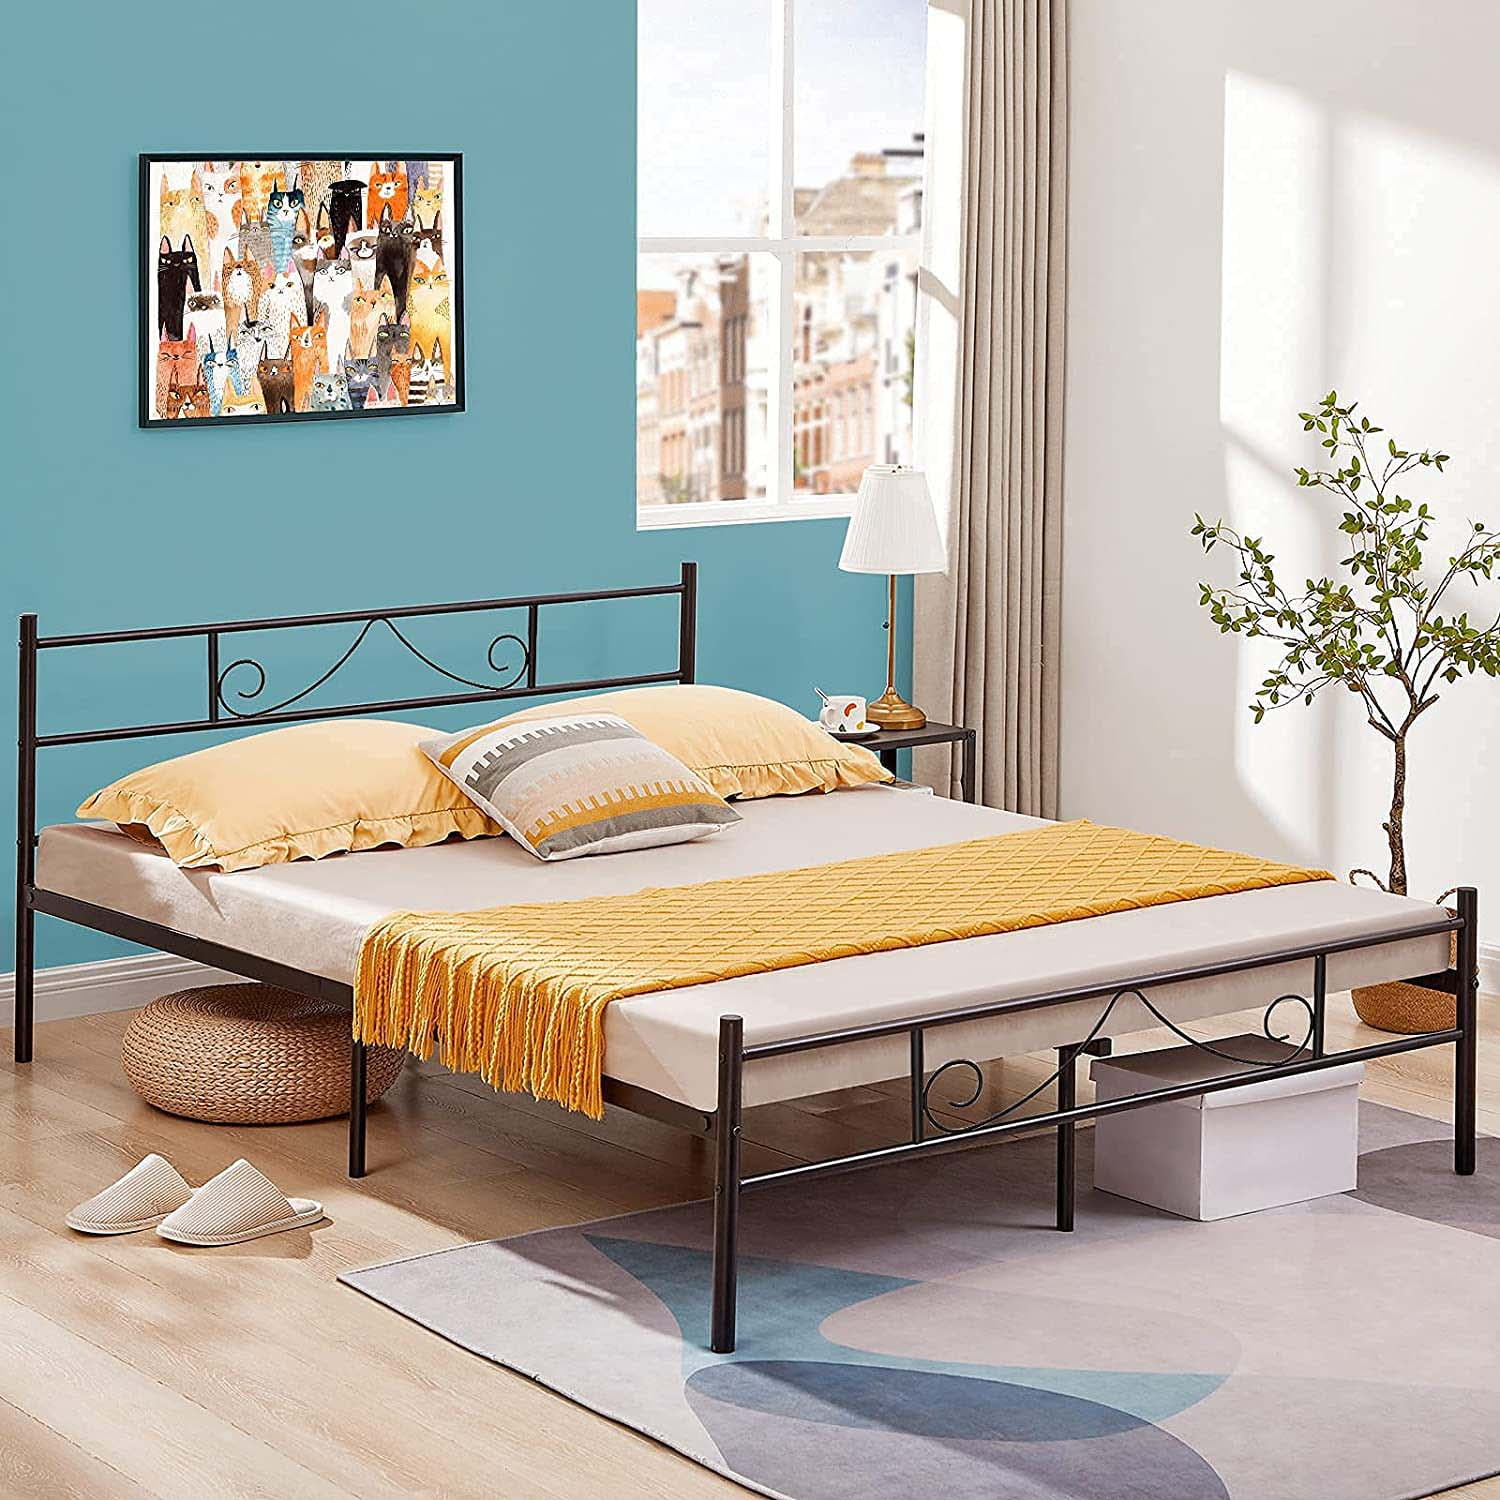 Homylin Queen Bed Frame Double, Latex Mattress Platform Bed Frame